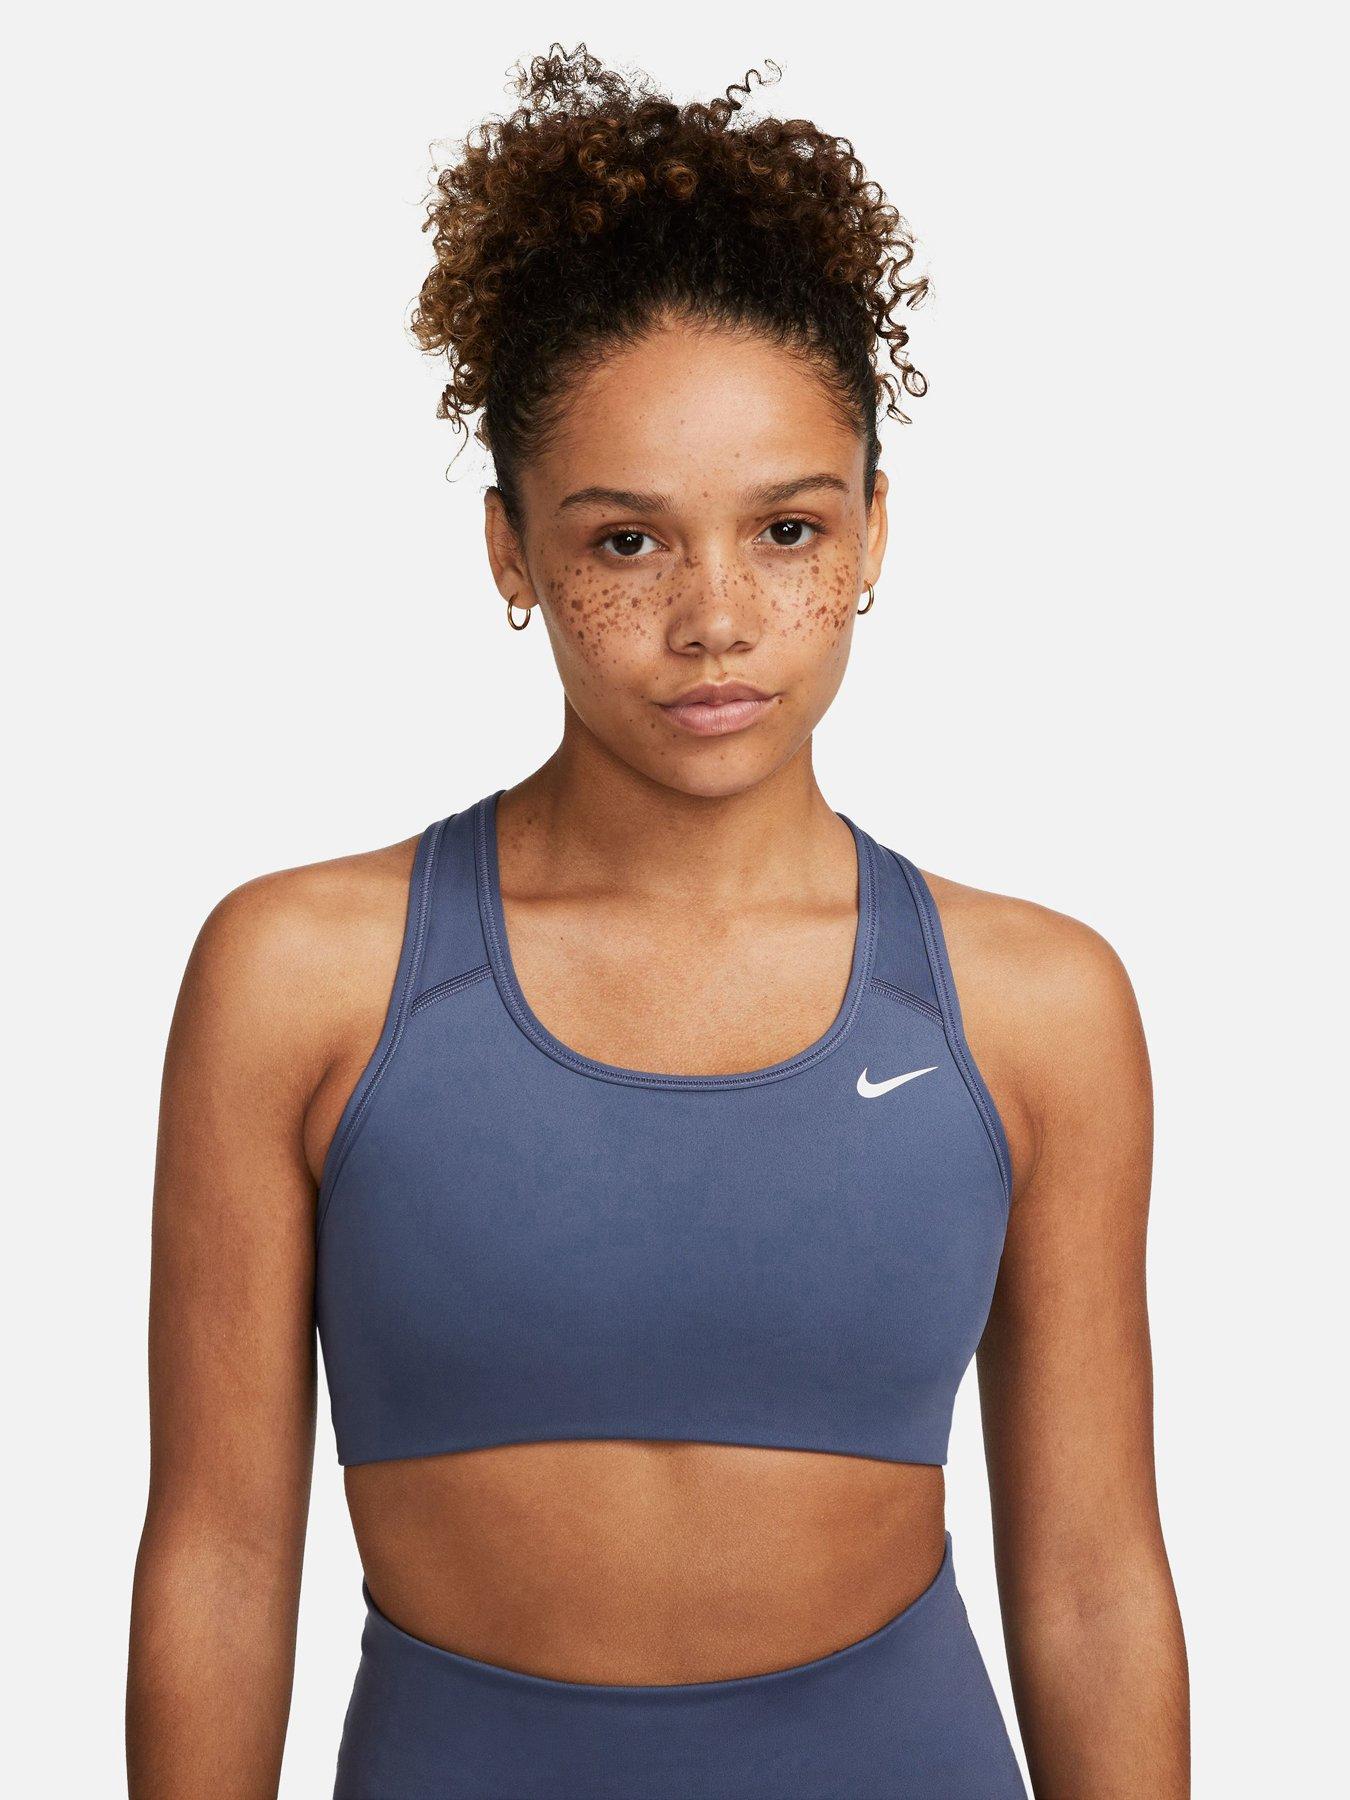 Nike Medium Support Swoosh Sports Bra - Blue